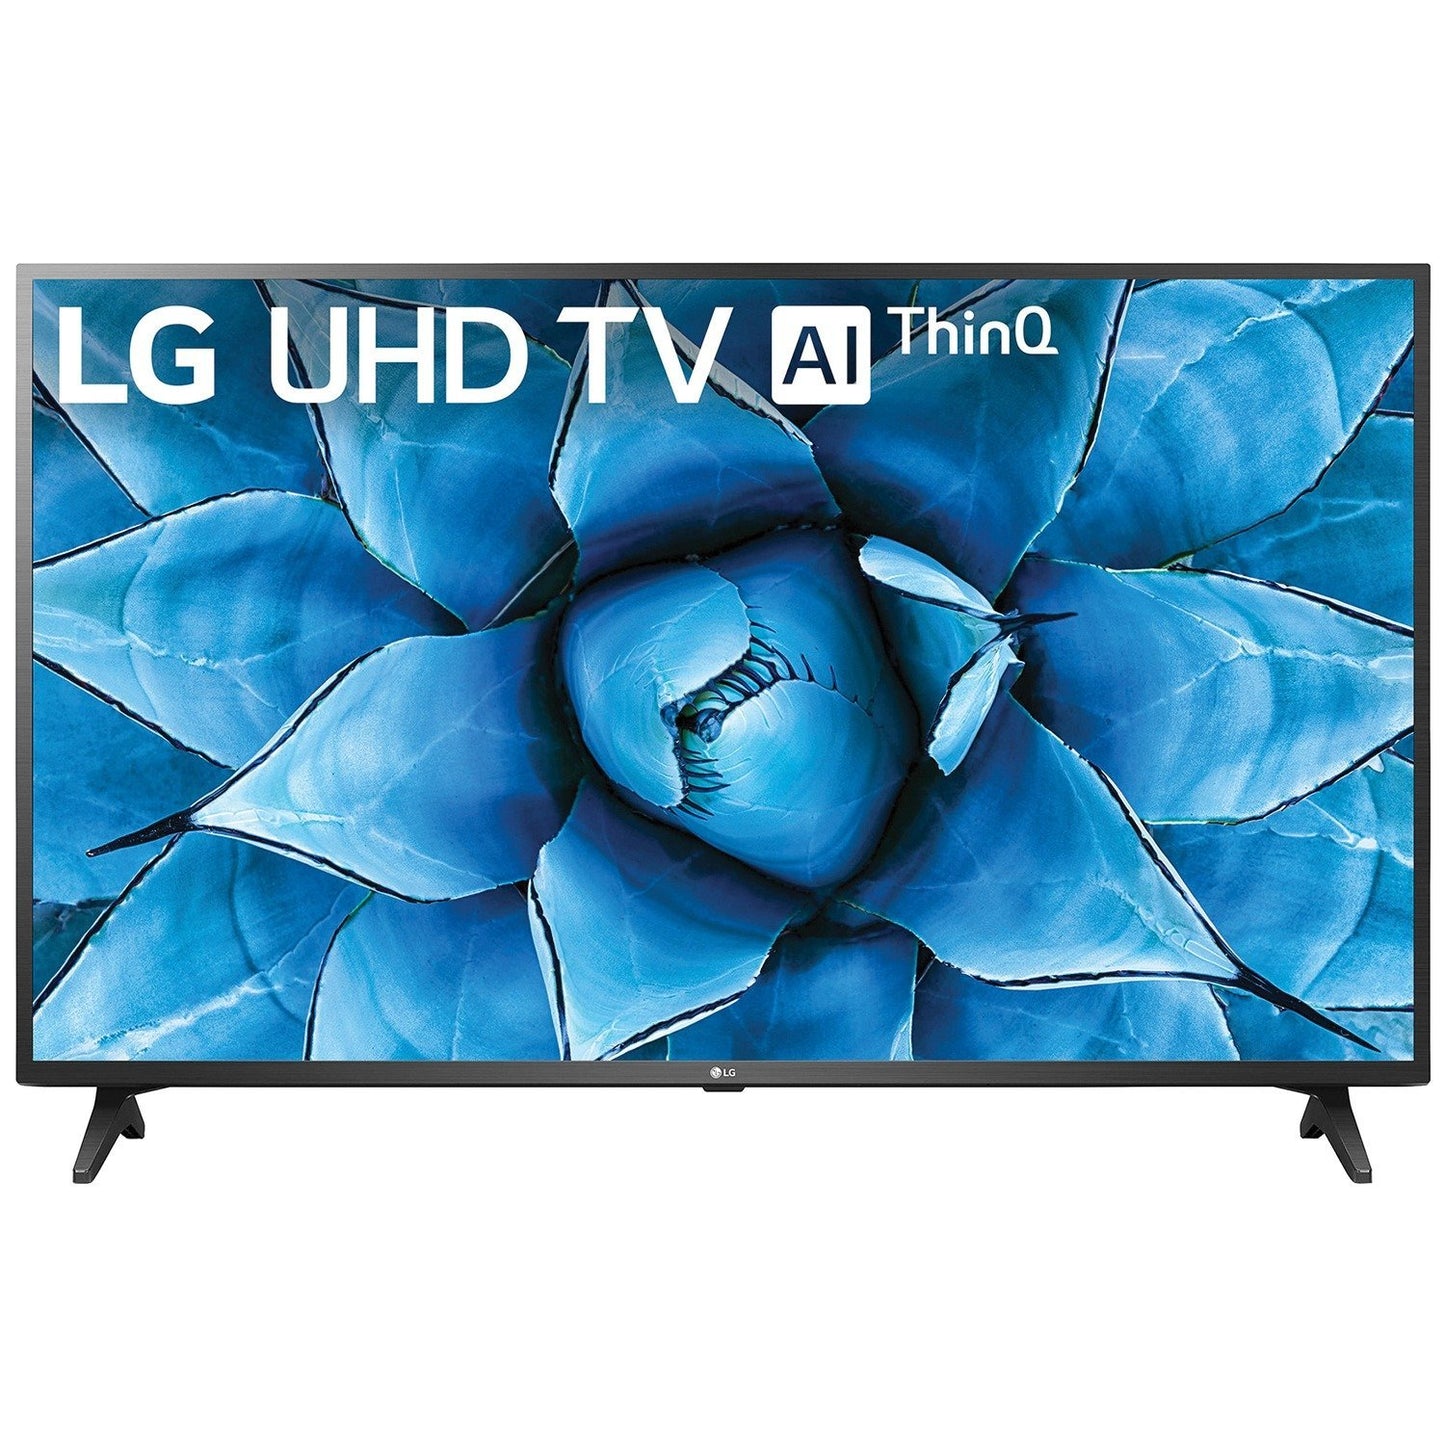 LG 43UN7300PUF 43-Inch Class 4K UHD Smart TV with AI ThinQ®